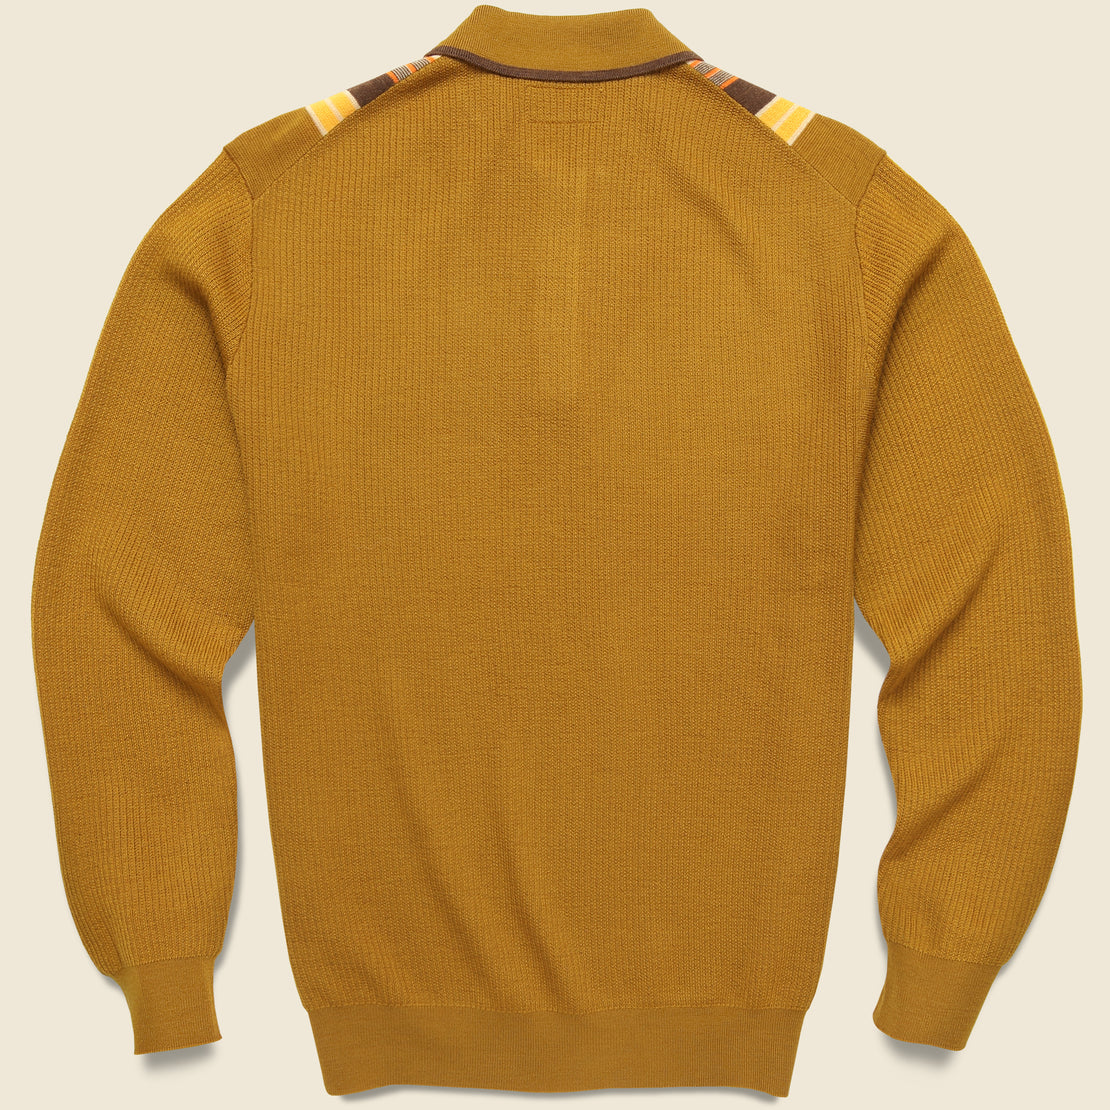 Striped Knit Sweater Polo - Mustard